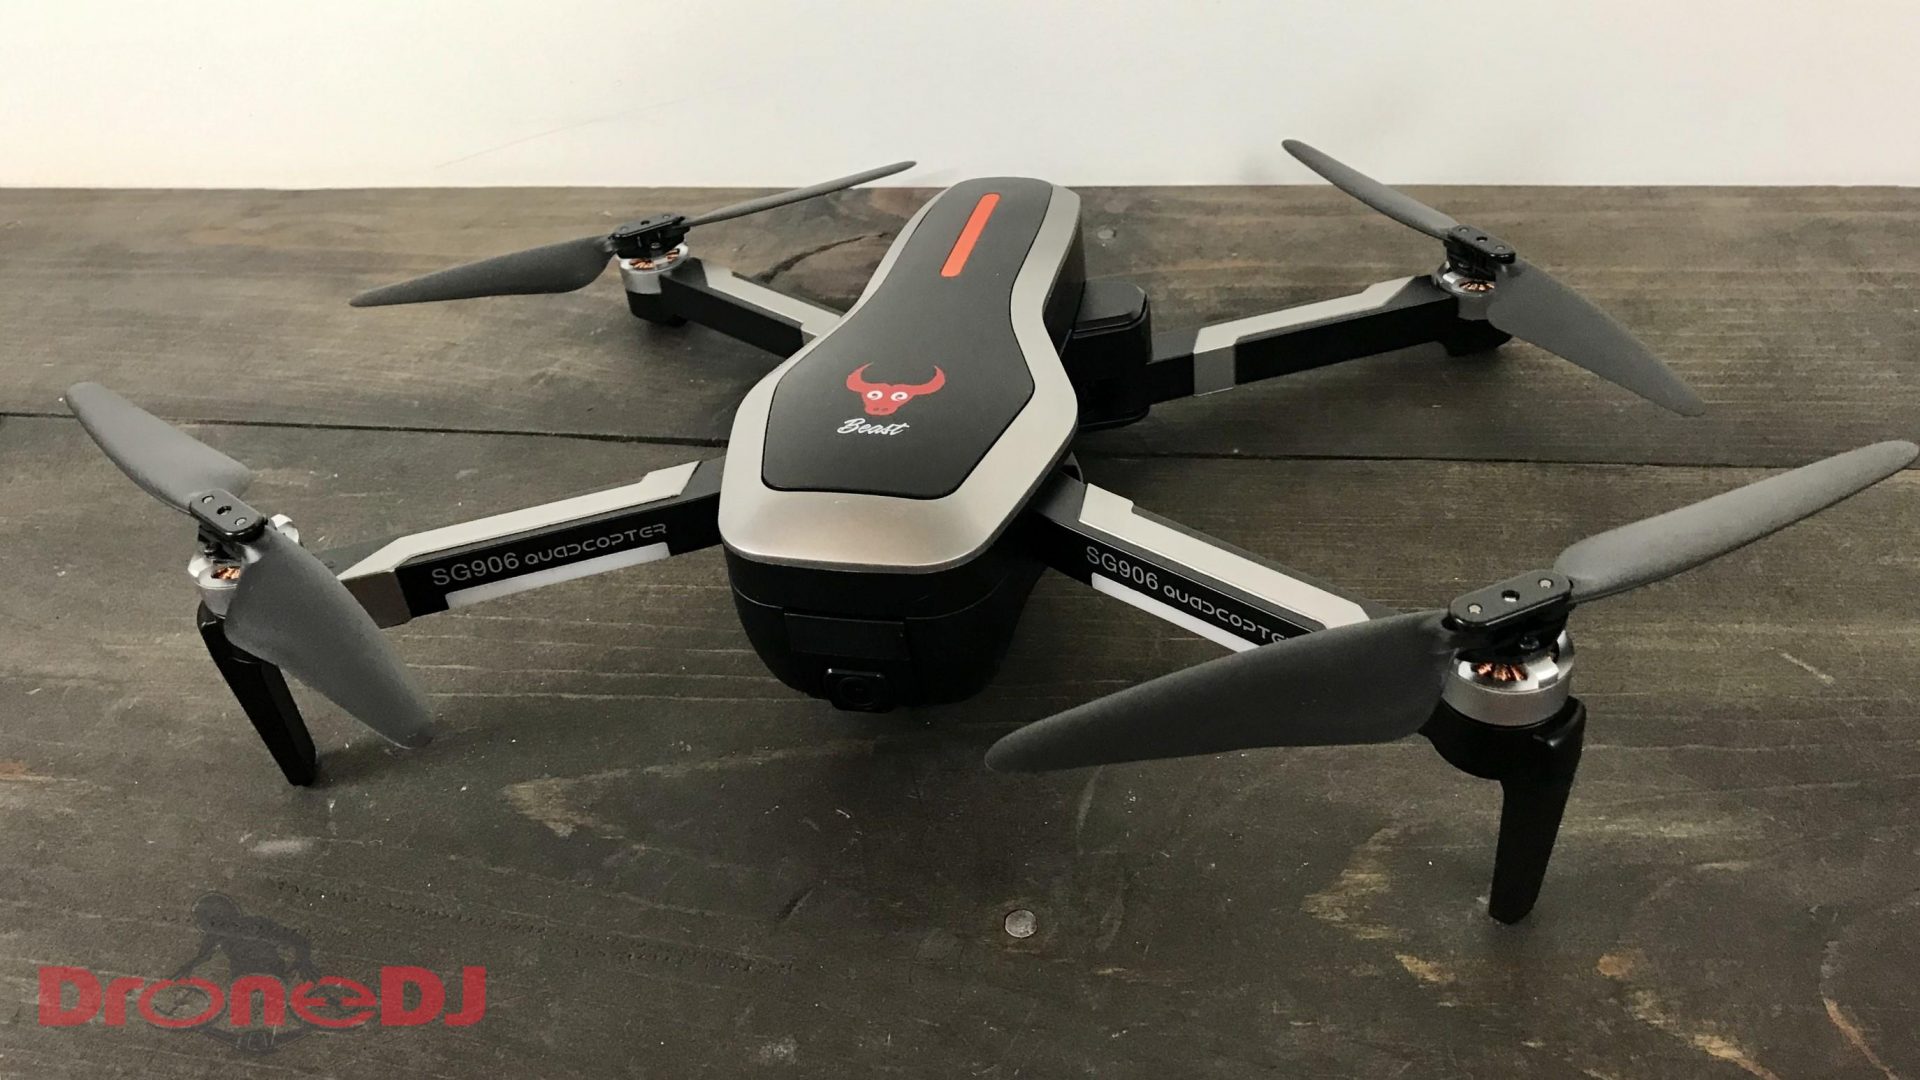 goolsky sg906 gps drone 4k